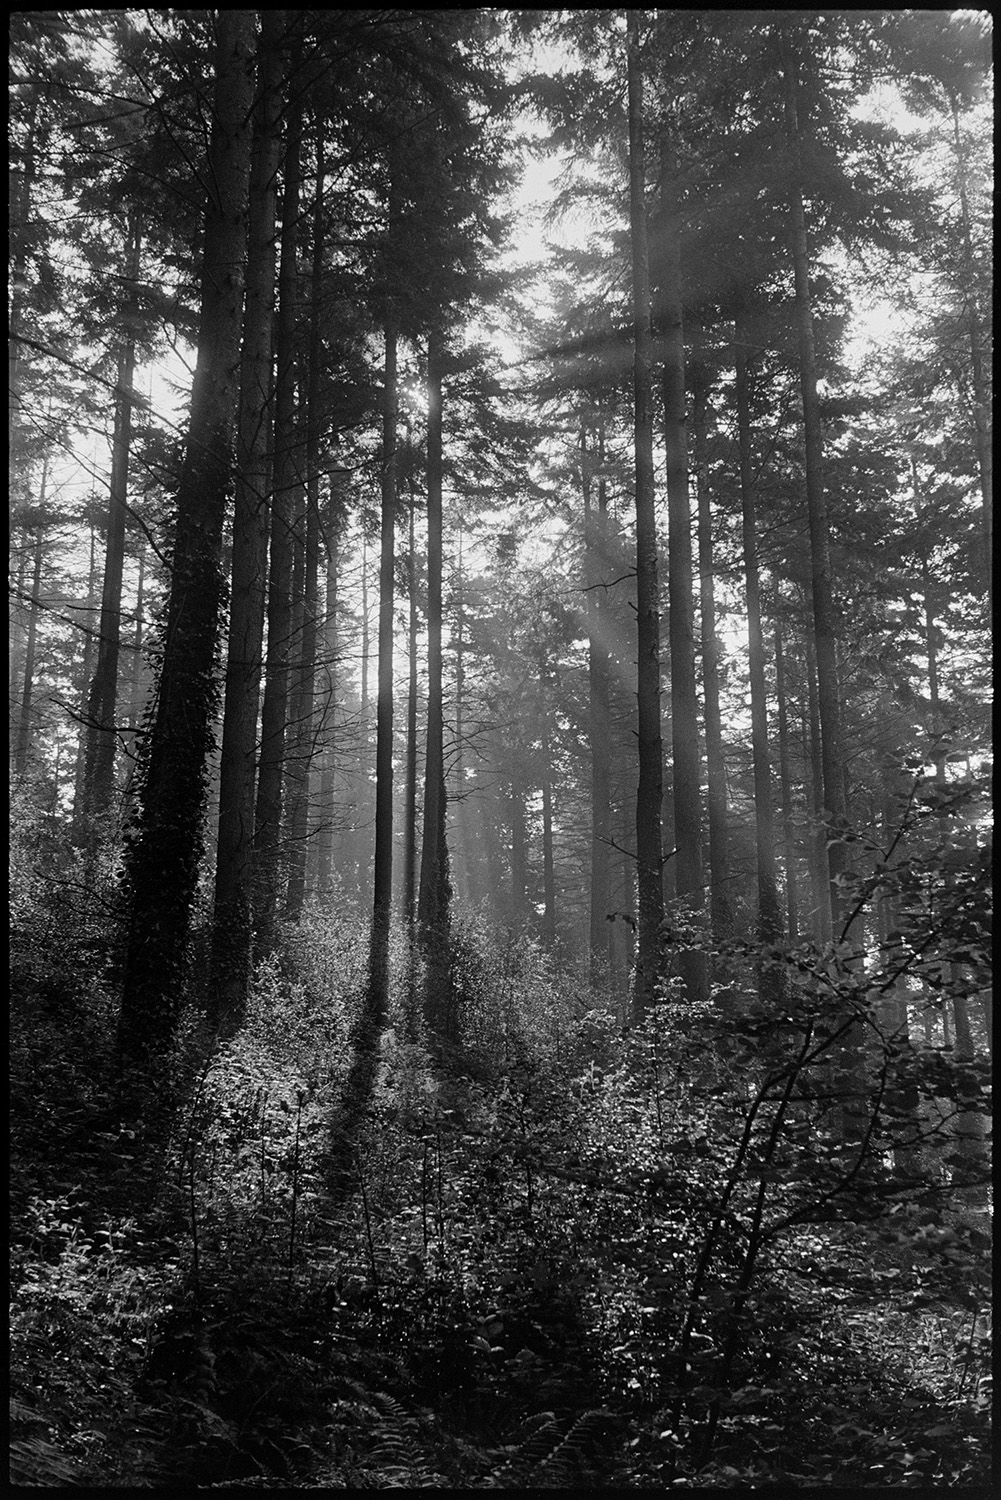 Fir forest with sunlight shafts.
[Shafts of light shining through fir trees in Eggesford Forest.]